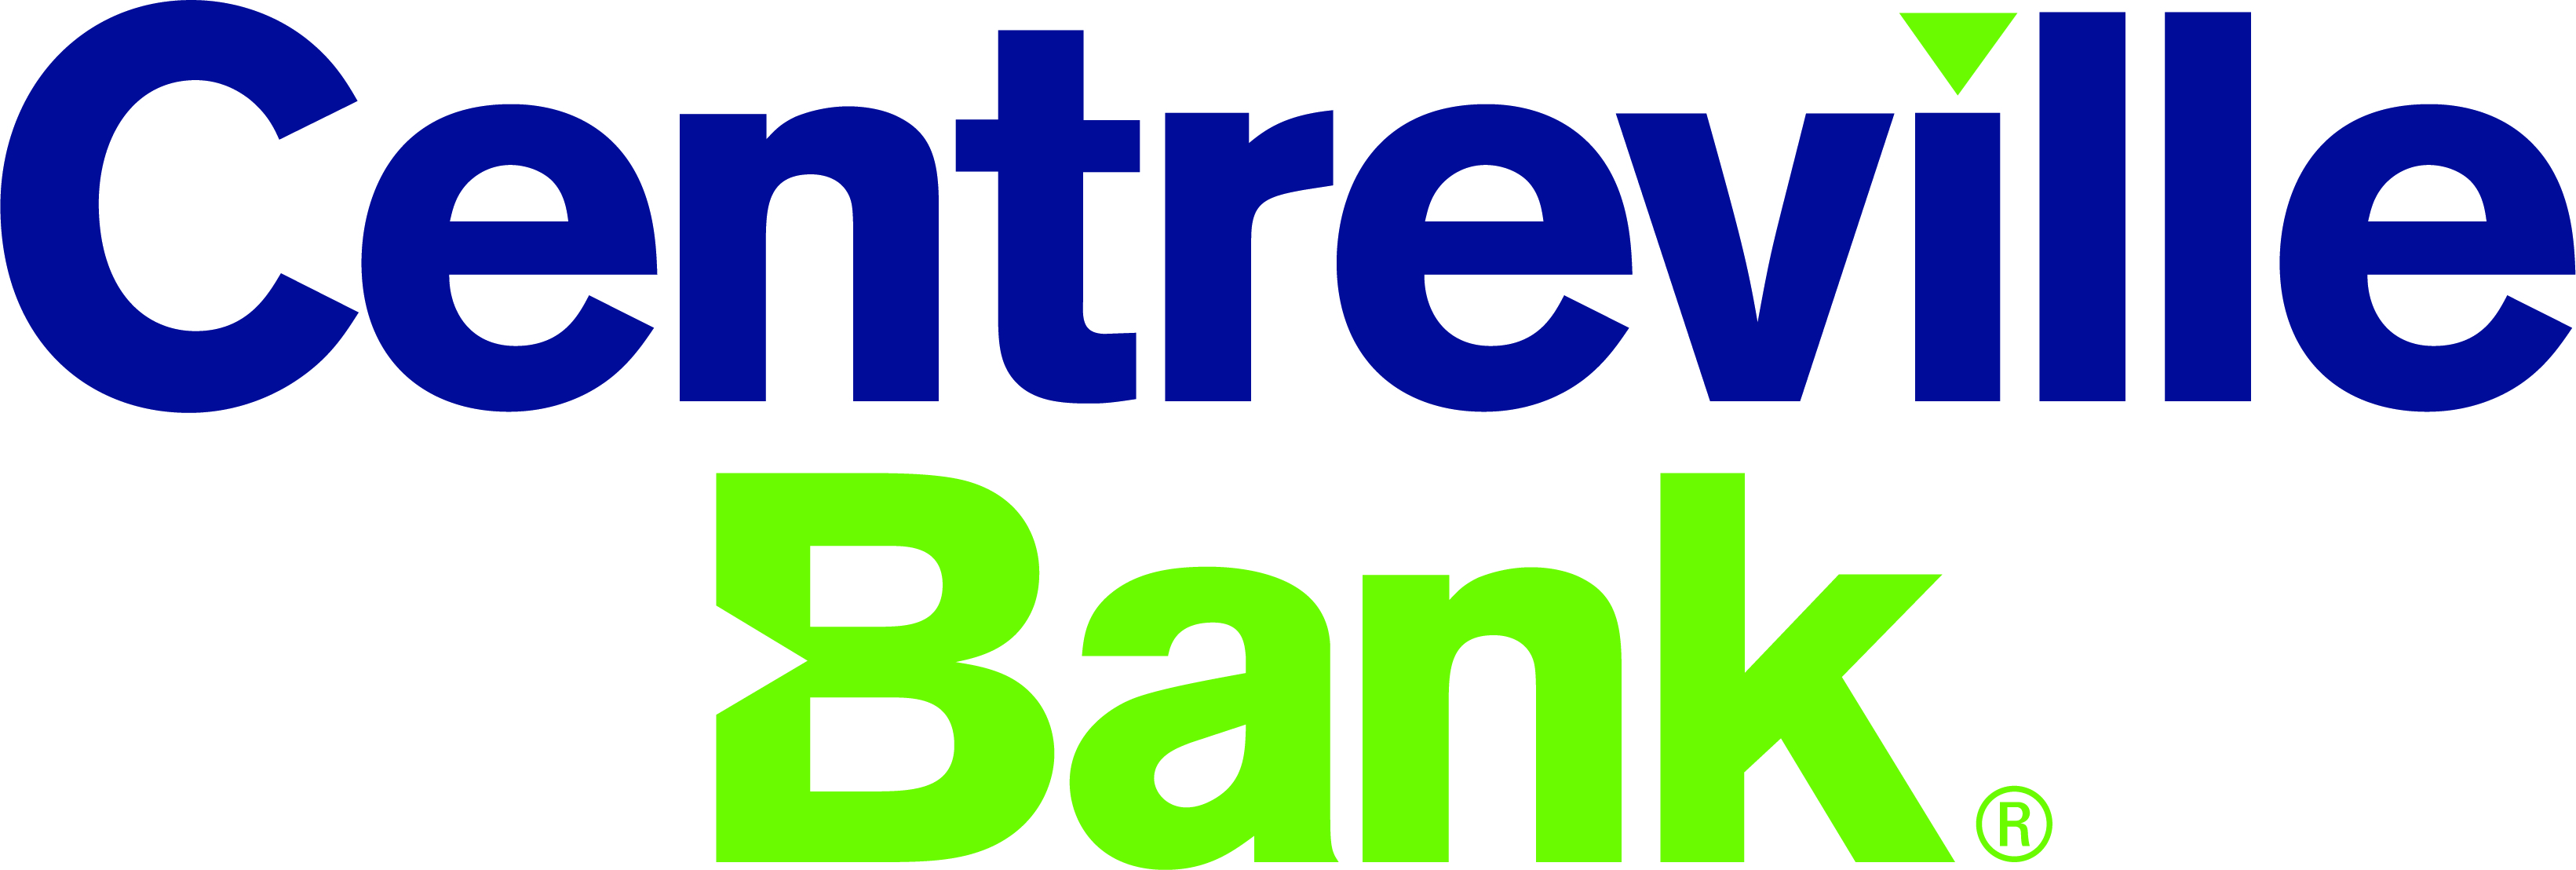 Centreville Bank 